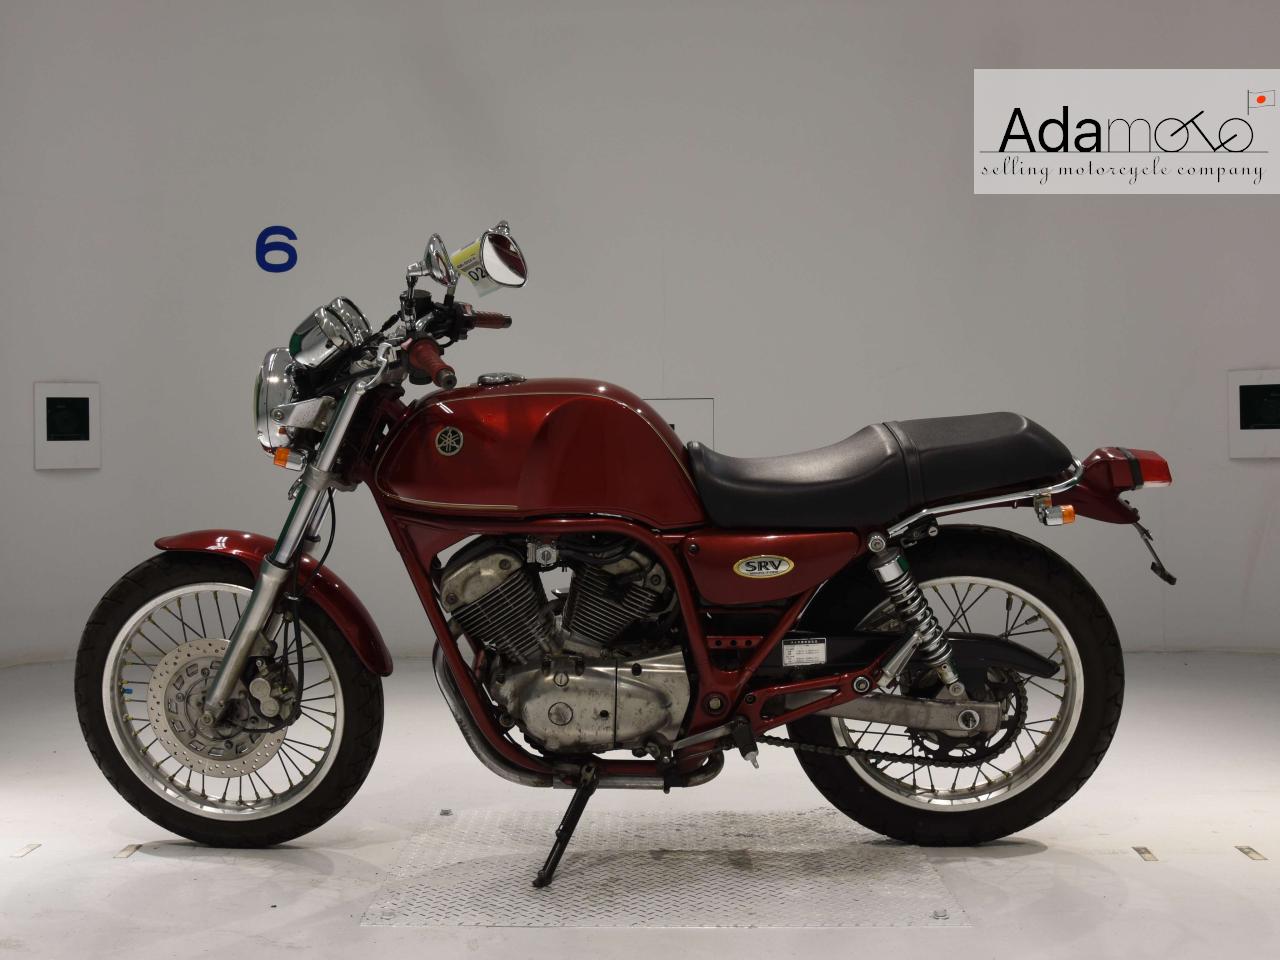 Yamaha SRV250 - Adamoto - Motorcycles from Japan